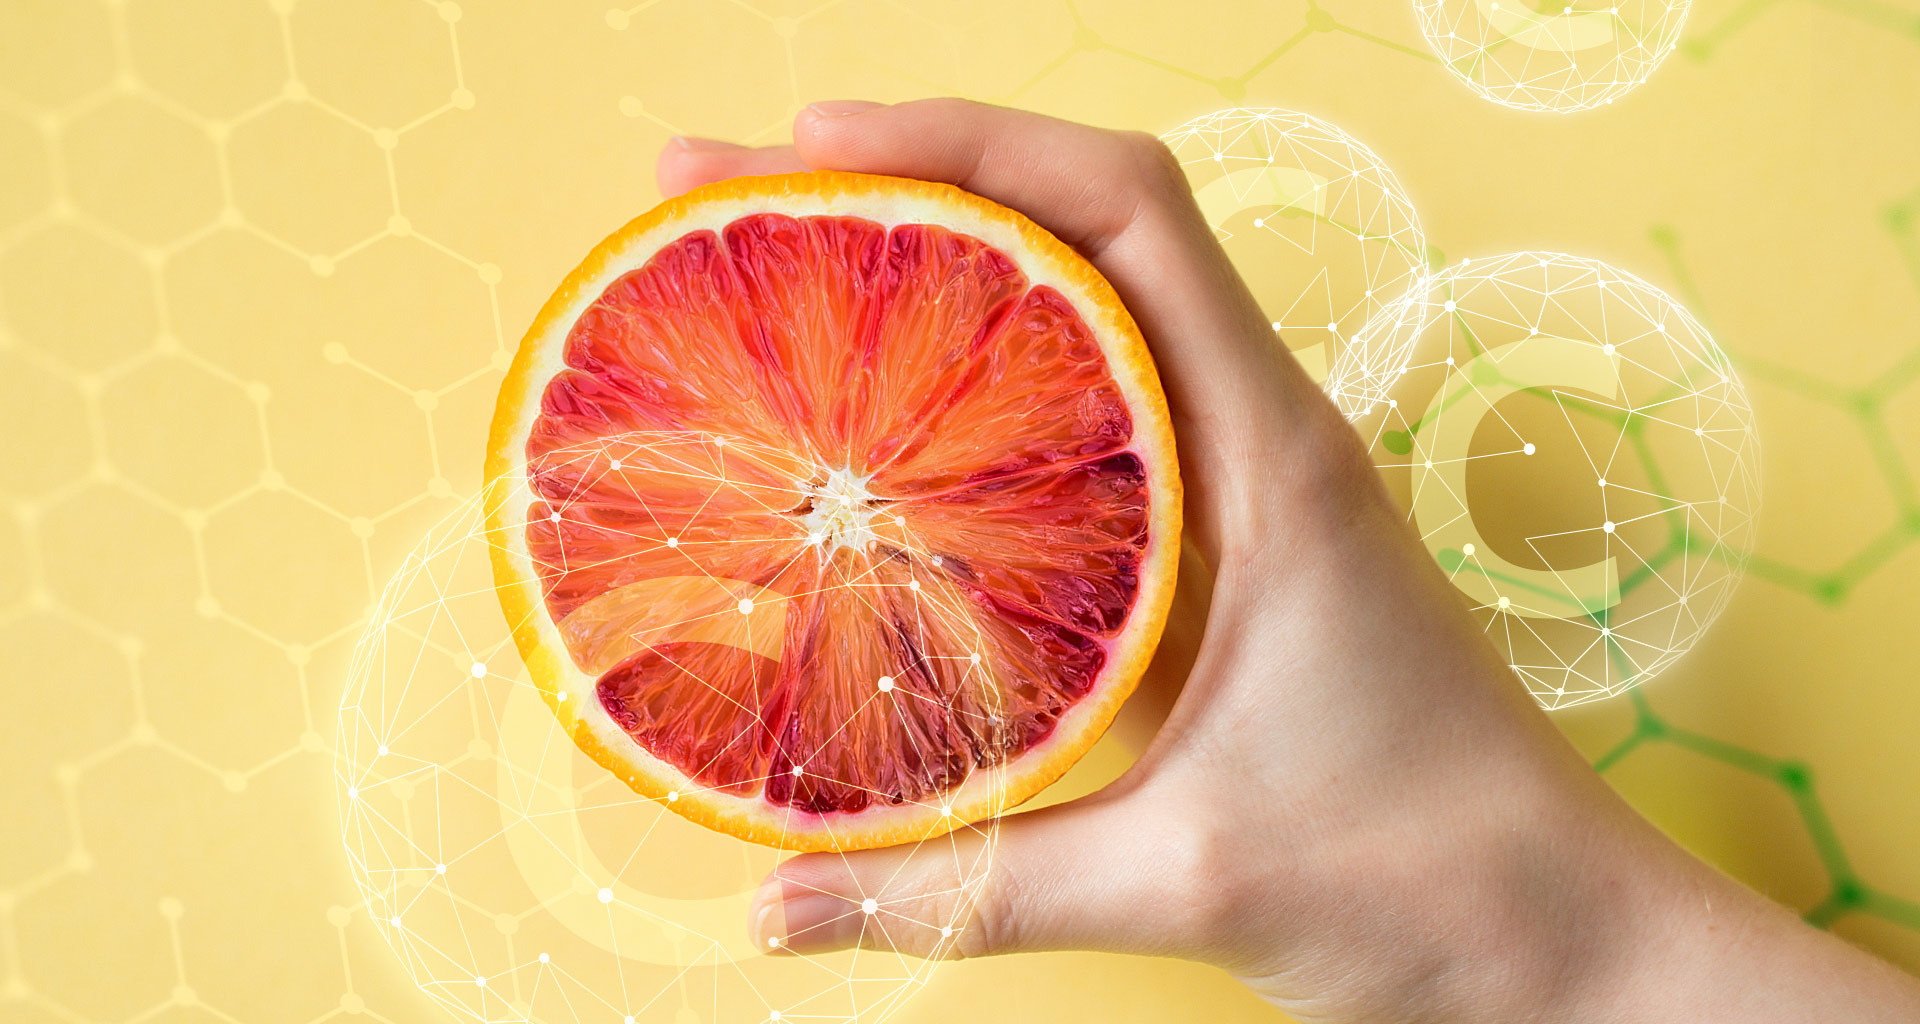 Blood oranges: the natural antioxidant